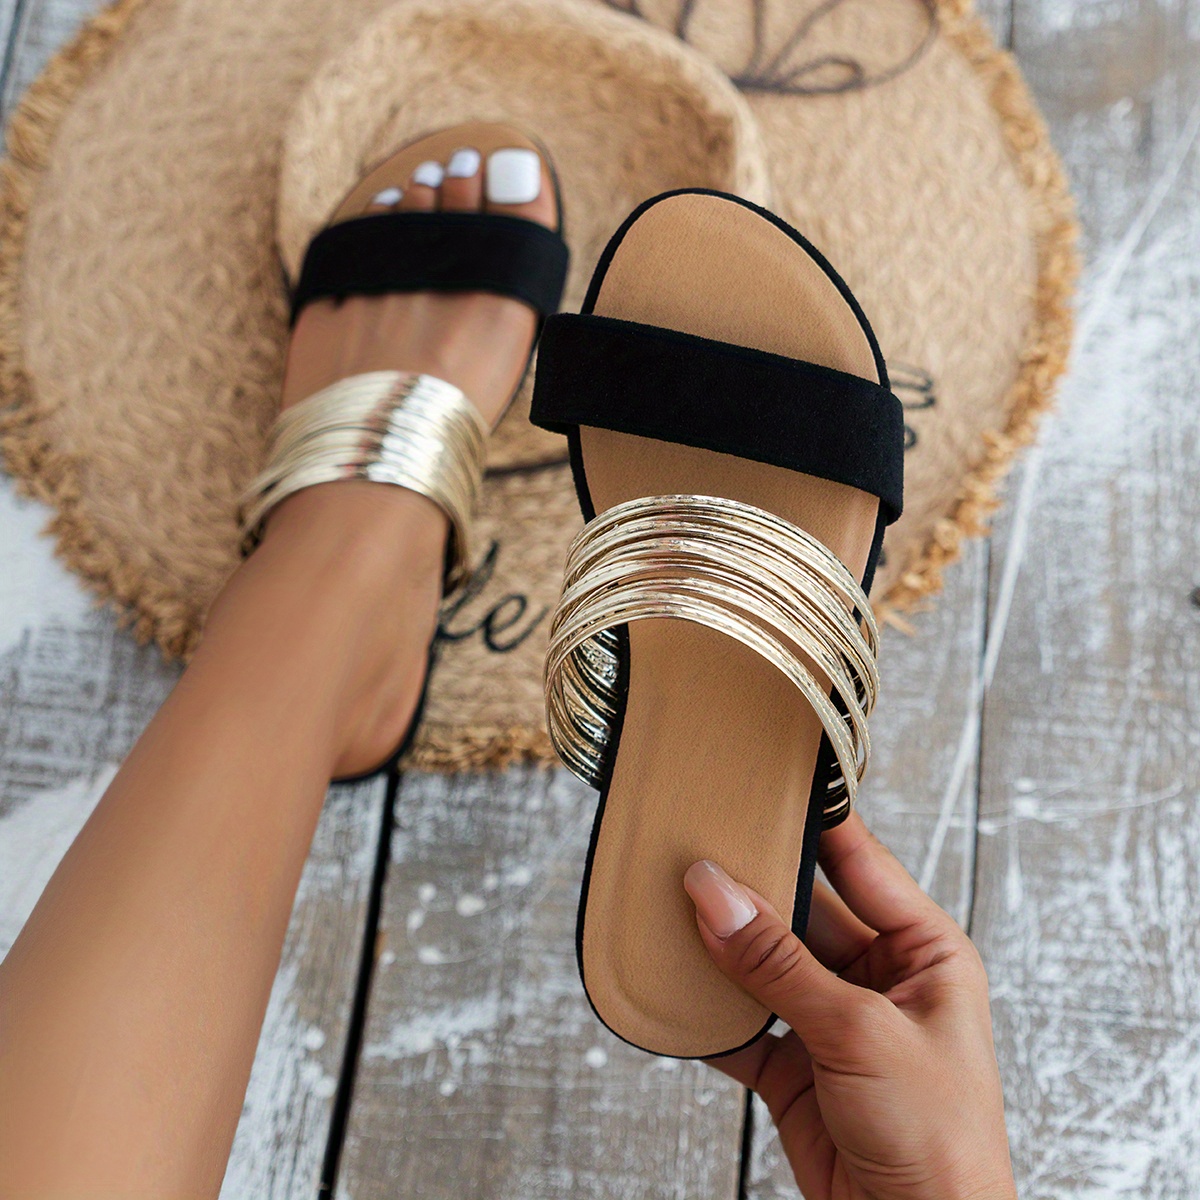 Stylish Flat Summer Shoes for Girls images